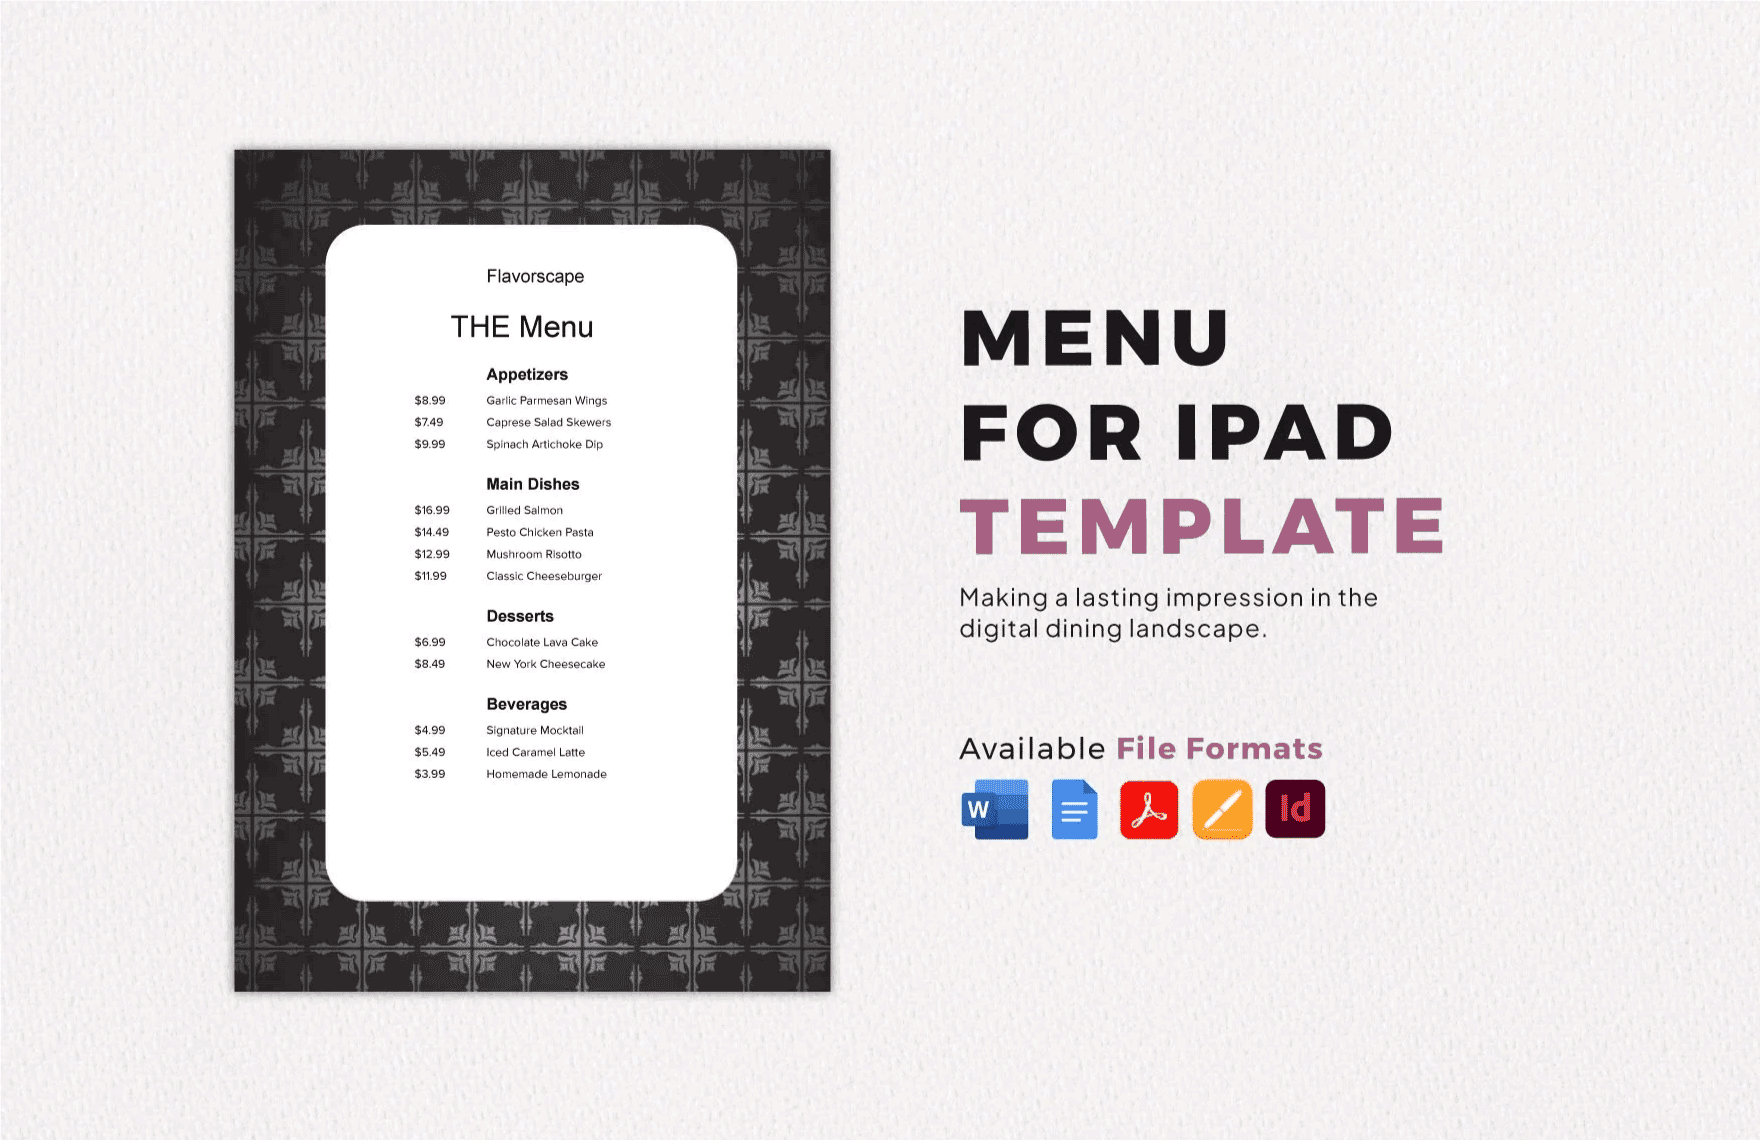 Menu for iPad Template